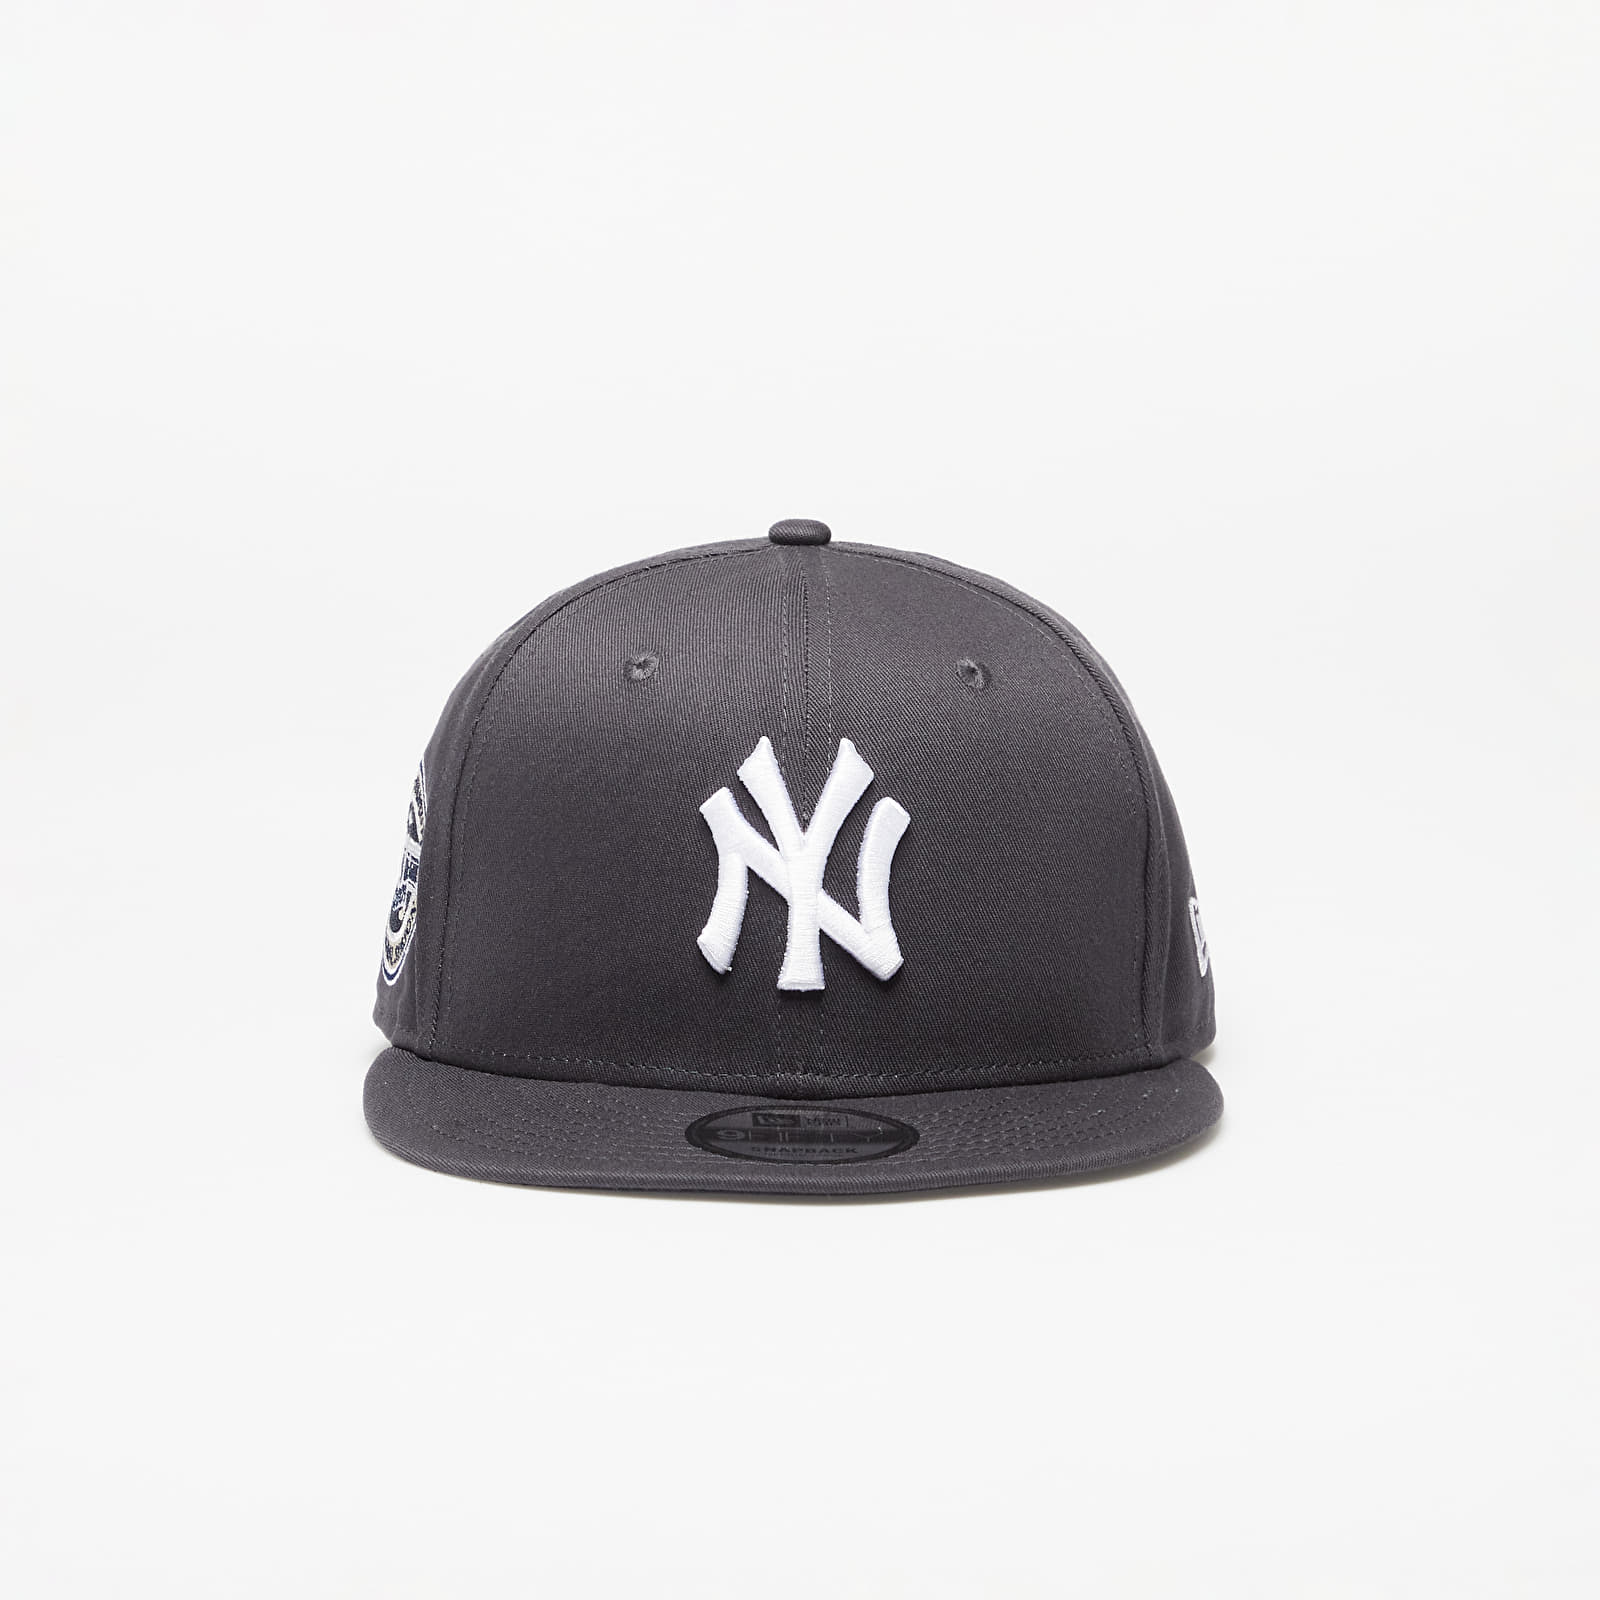 Caps New Era New York Yankees New Traditions 9FIFTY Snapback Cap Graphite/Dark Graphite/ Navy